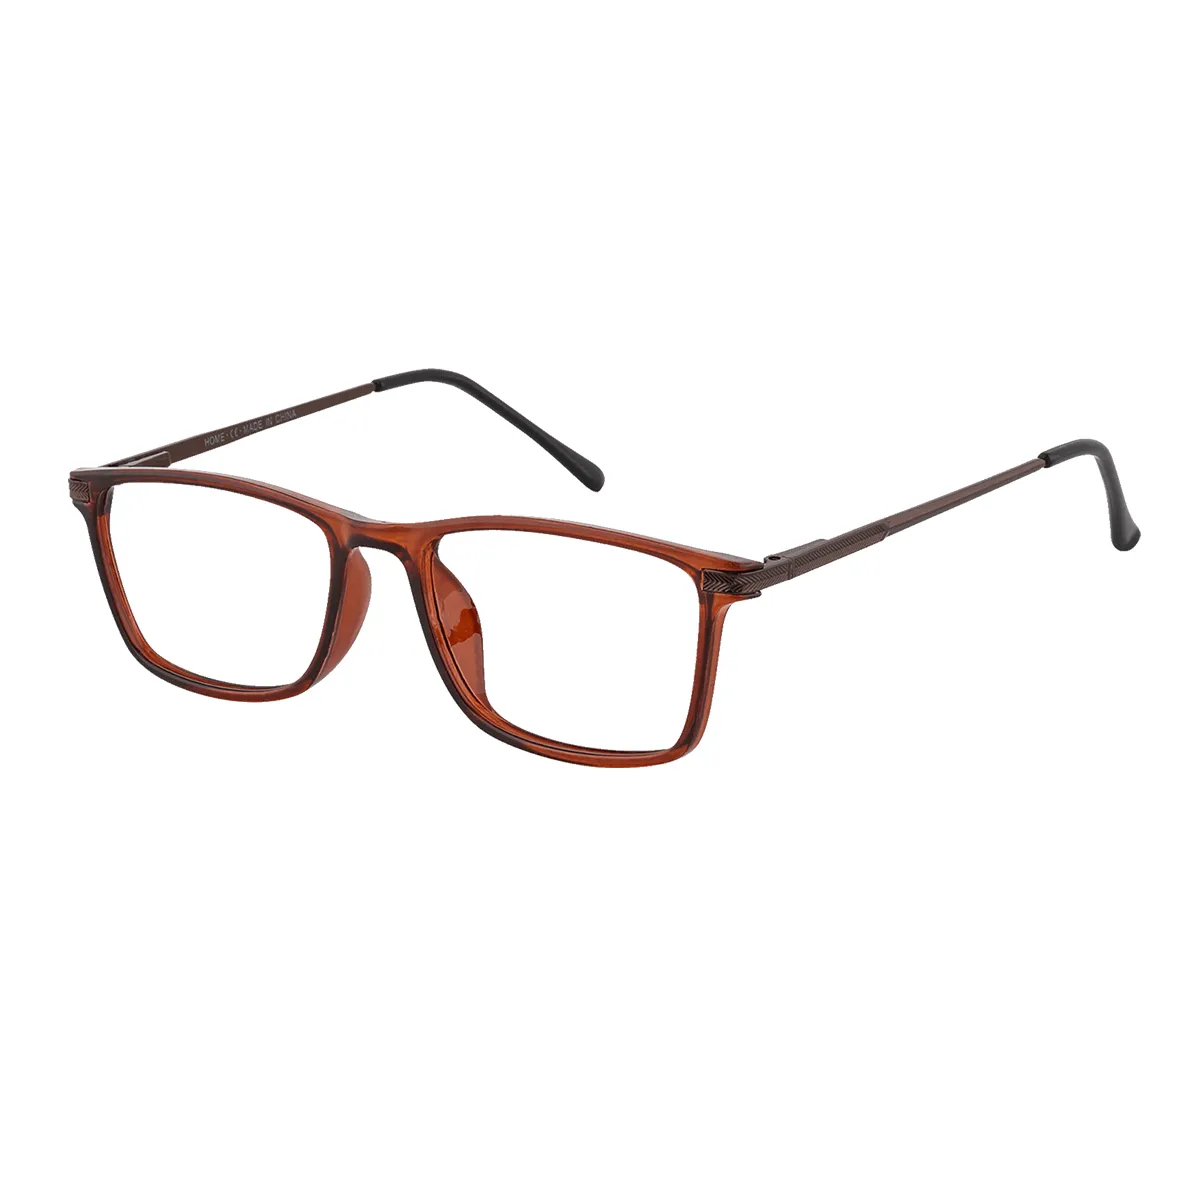 Alicia - Rectangle Brown Glasses for Men & Women - EFE